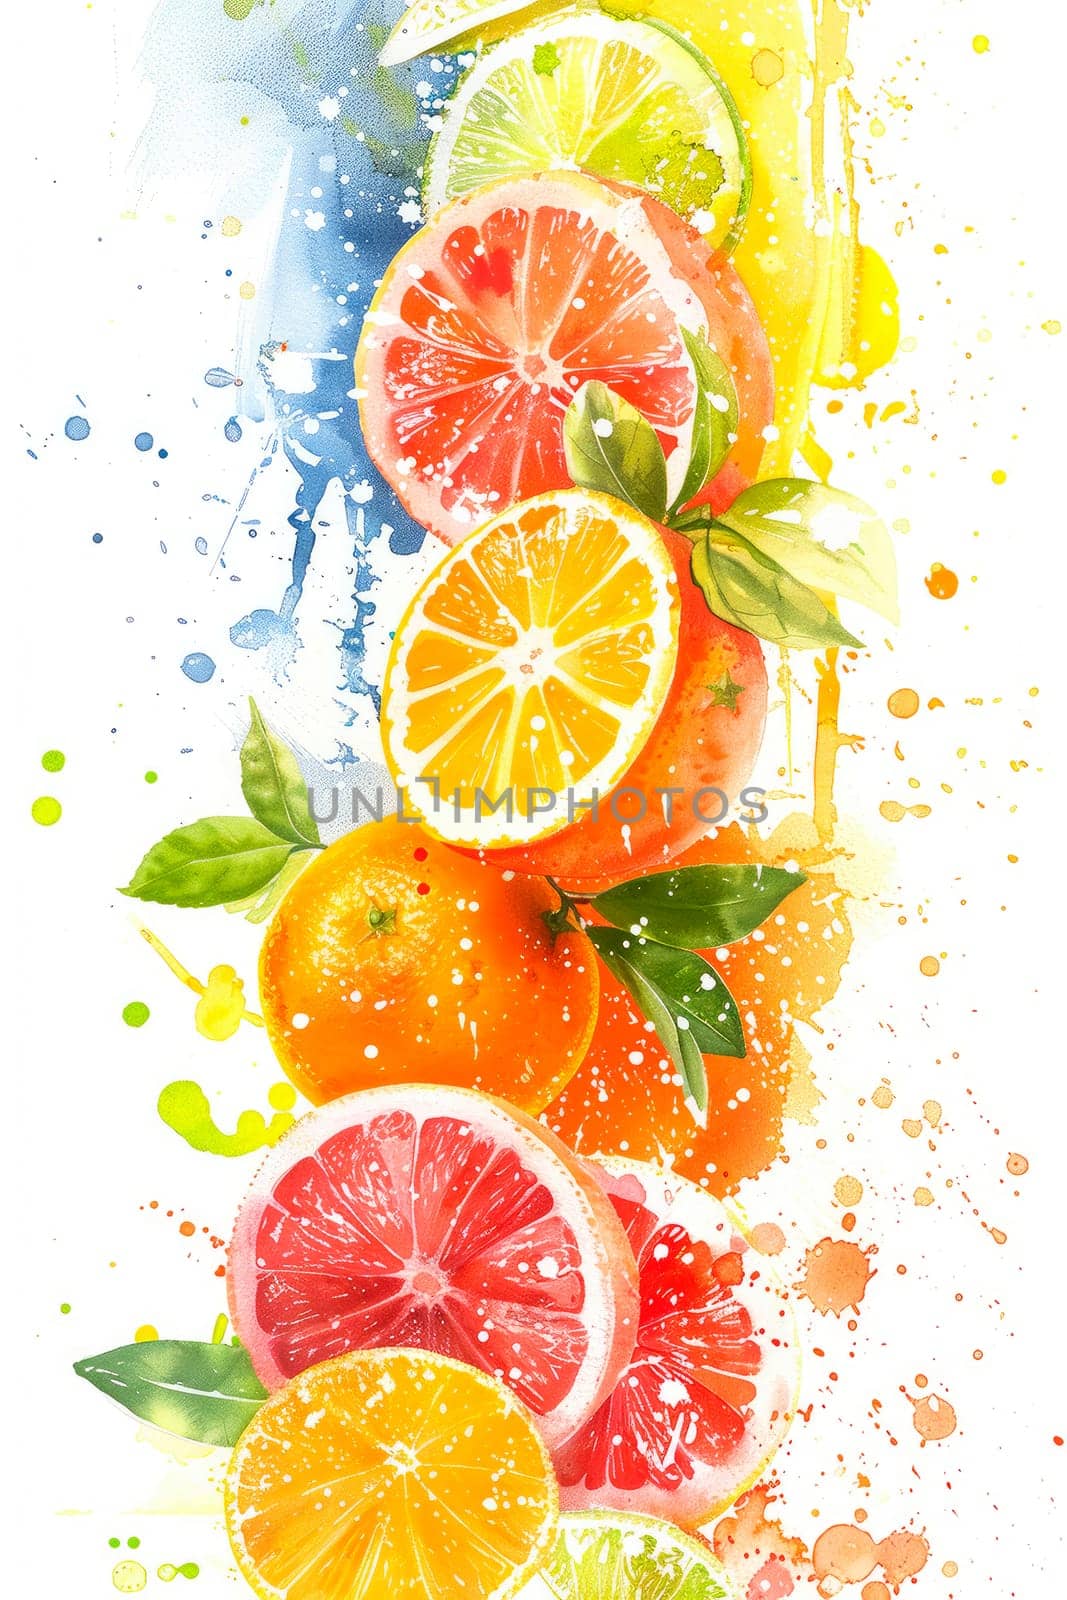 drawing watercolor citrus fruits. selective focus. by yanadjana